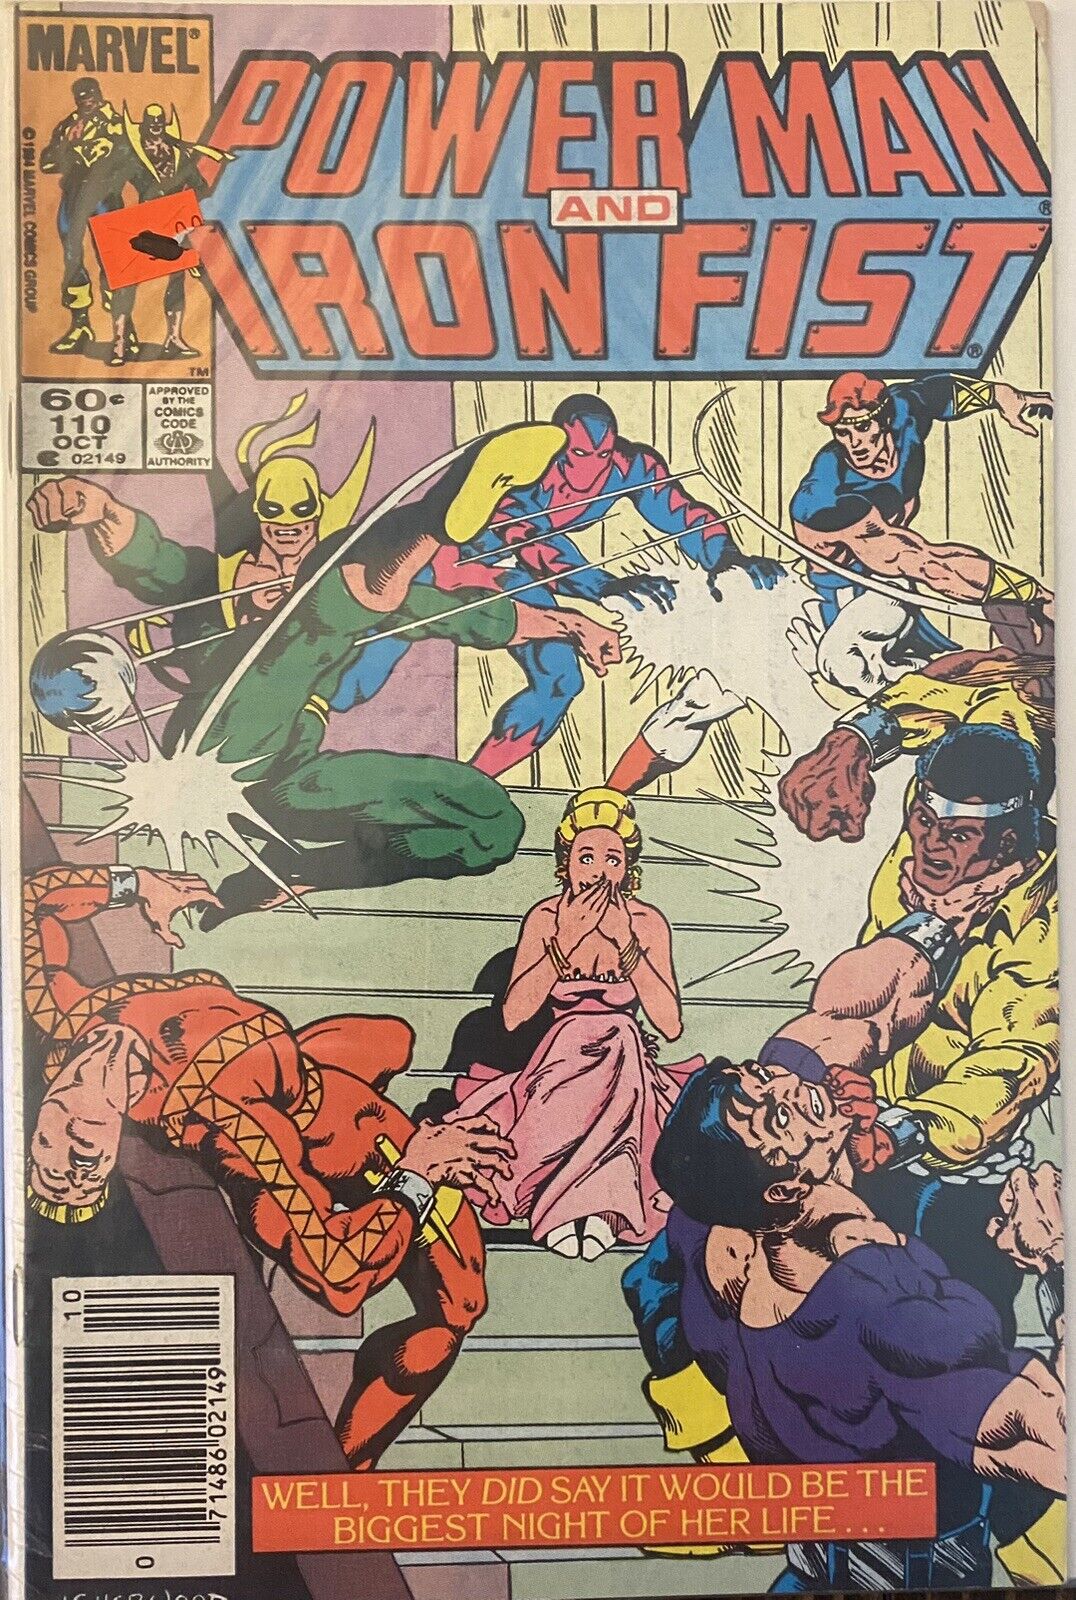 Power Man & Iron Fist Bundle 1. Lot of 29 books Marvel